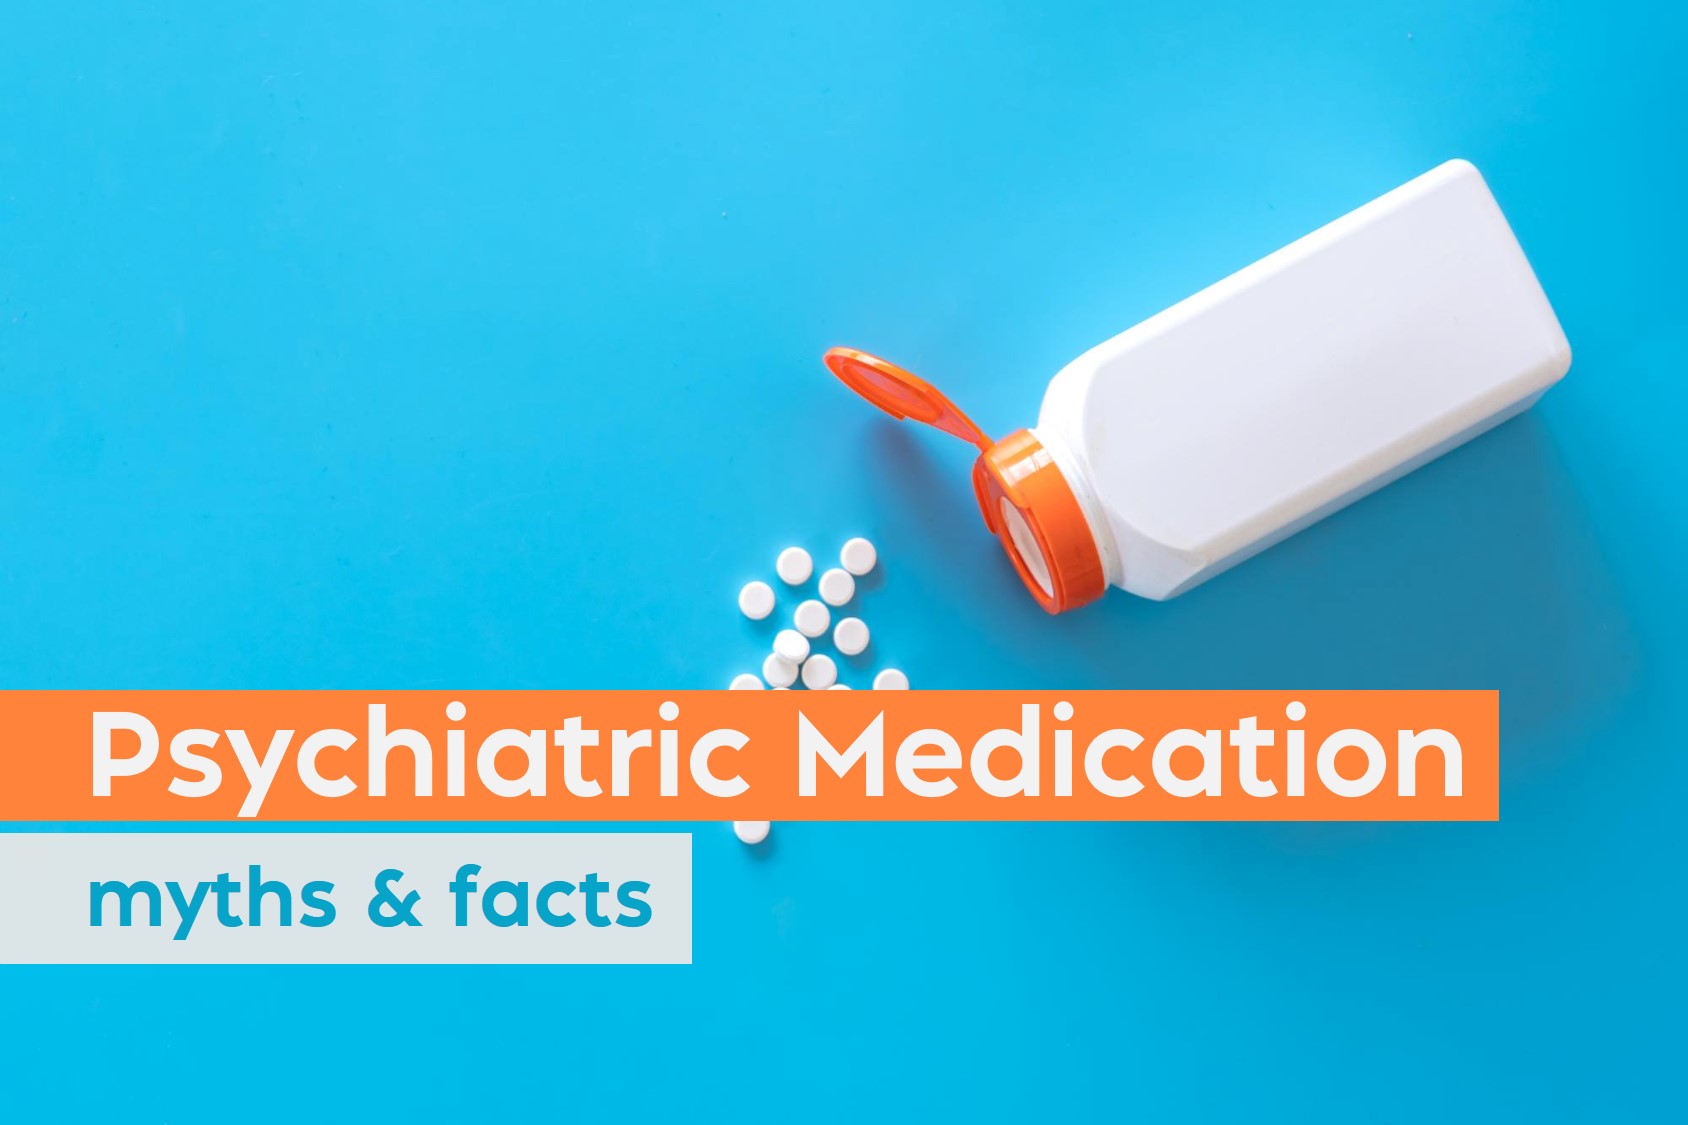 medication_myths_facts